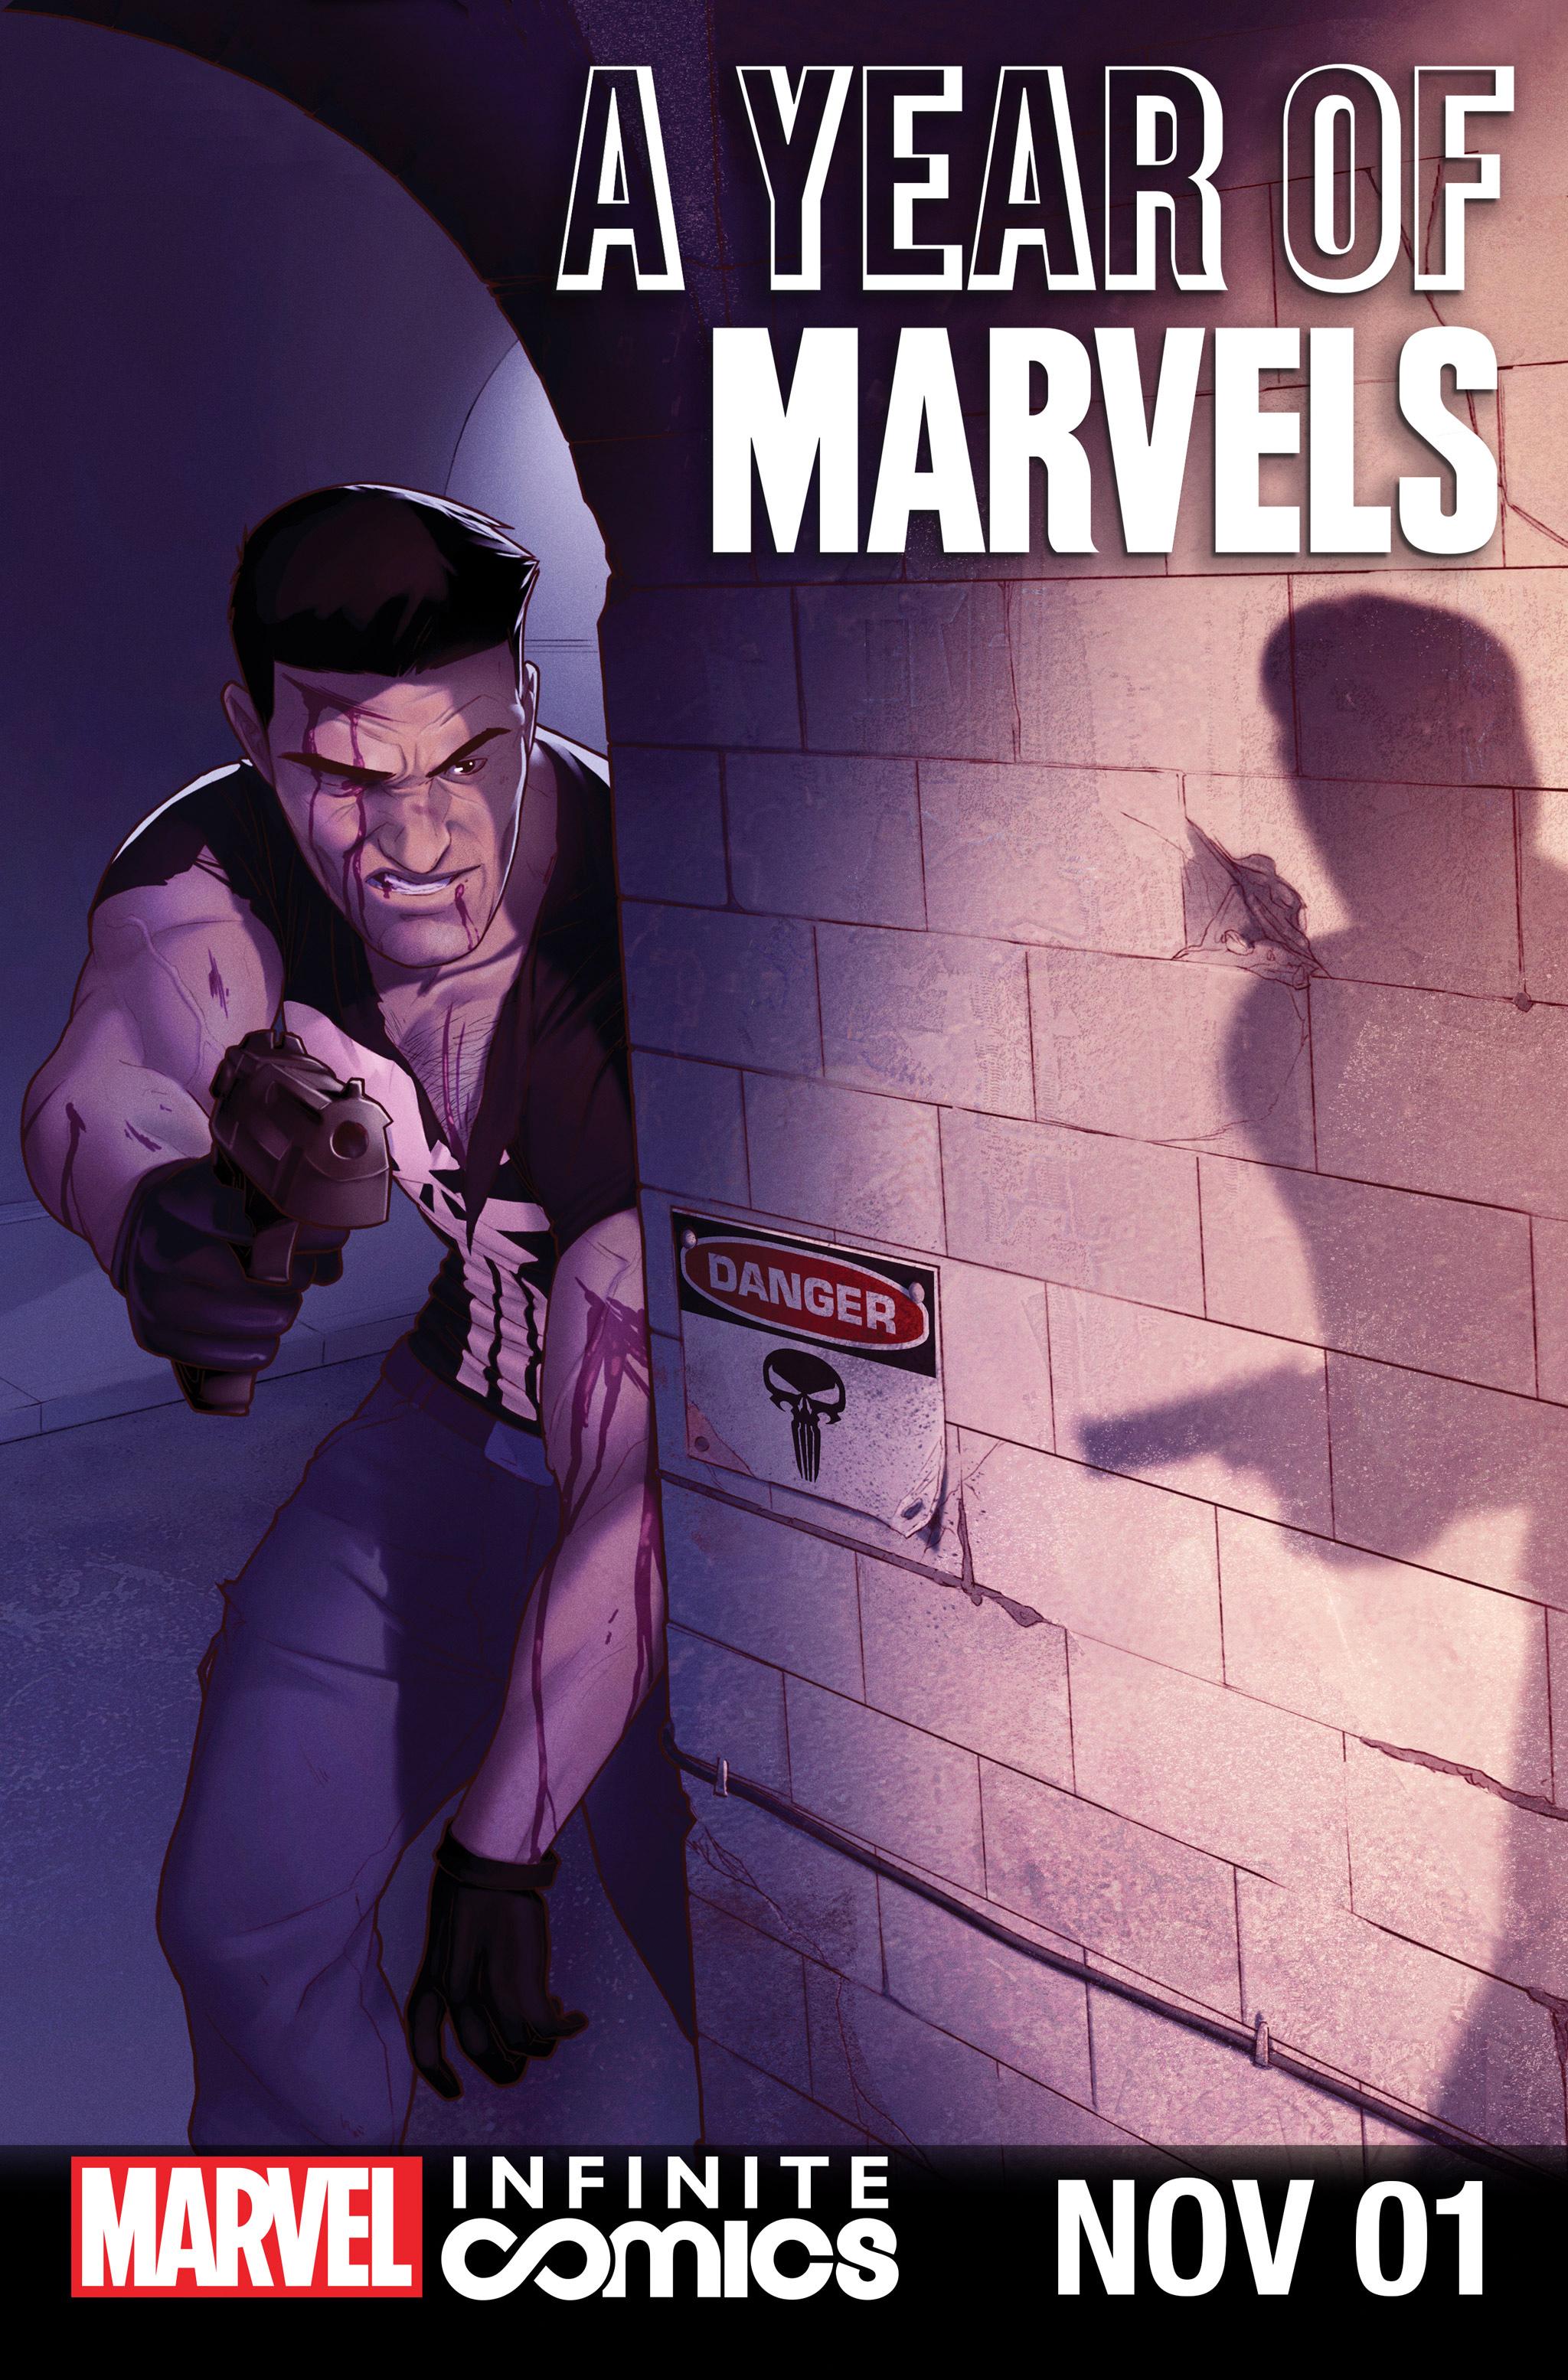 A Year of Marvels: November Infinite Comic Vol. 1 #1